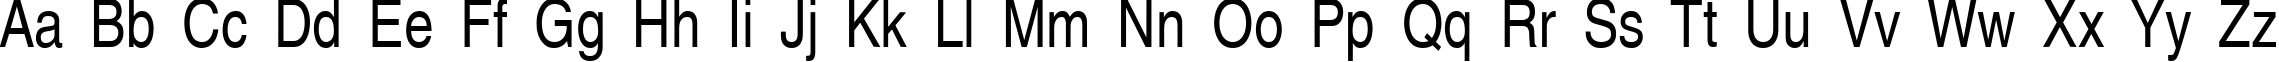 Пример написания английского алфавита шрифтом AGHlvCyrillic Normal80n